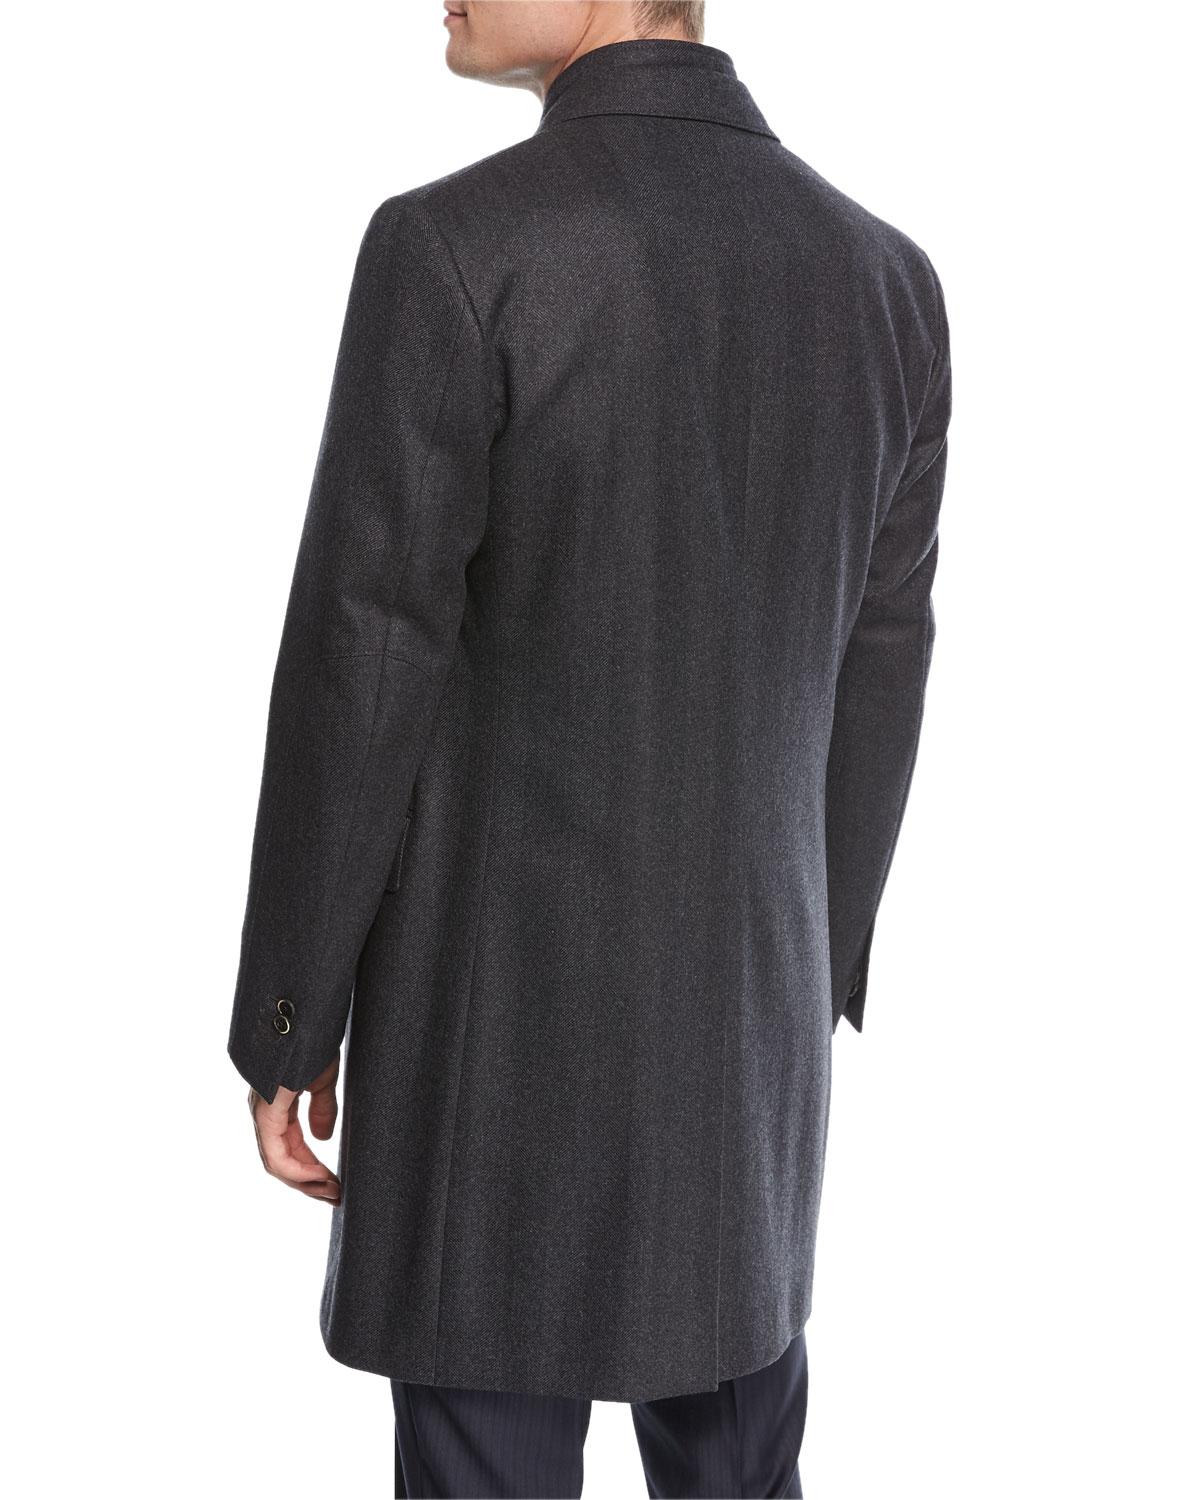 Corneliani Single-breasted Herringbone Wool Top Coat in Charcoal (Gray ...